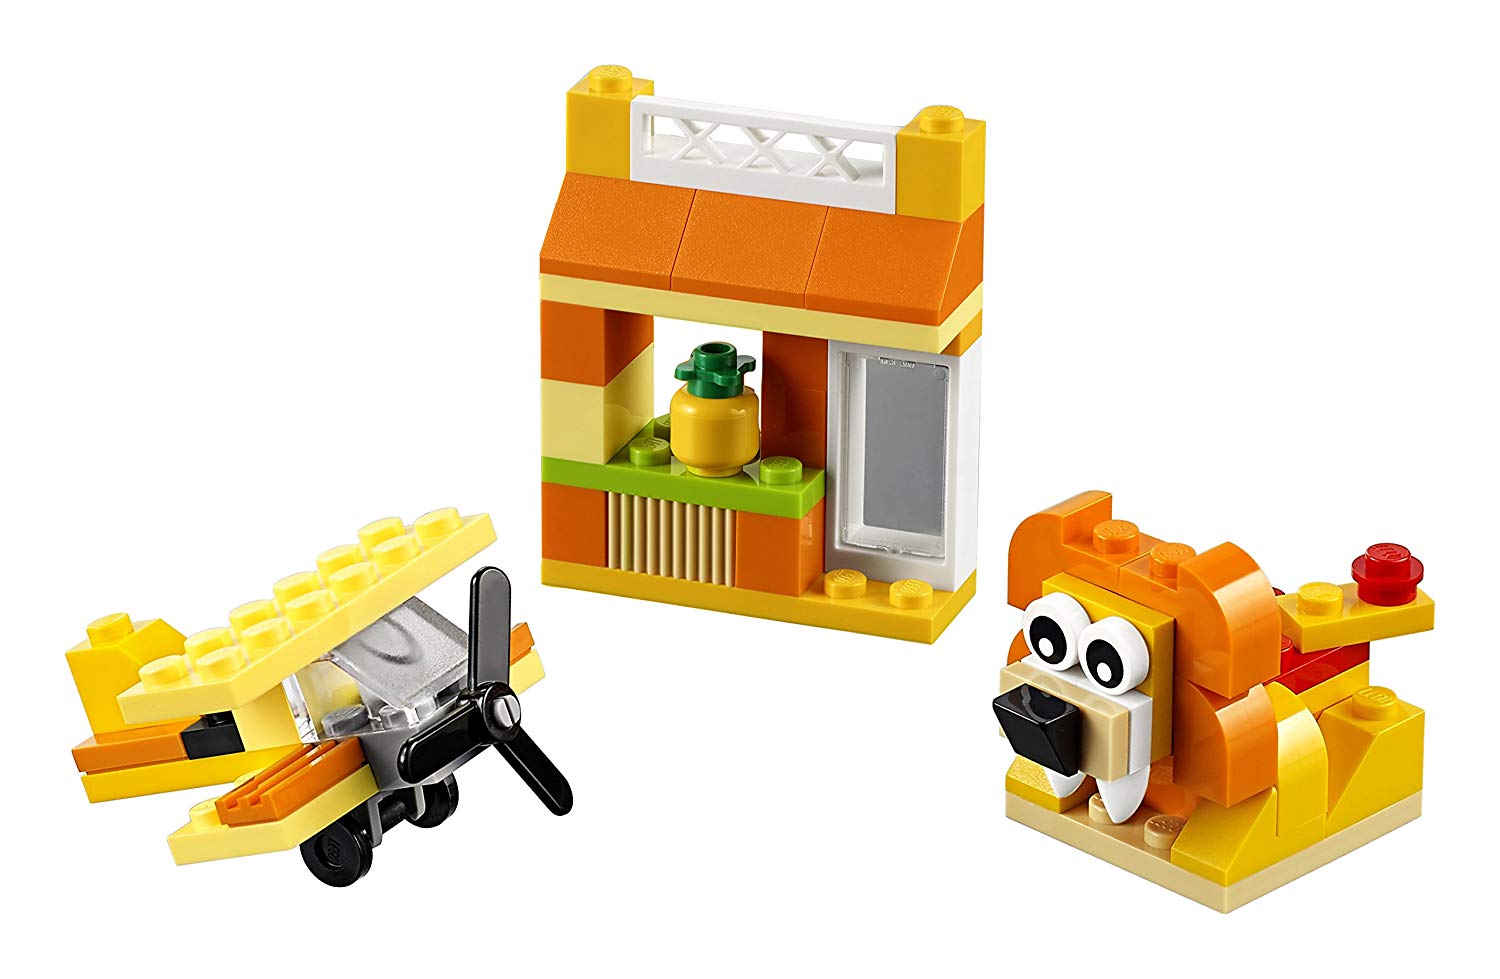 لگو orange creativity box lego 10709